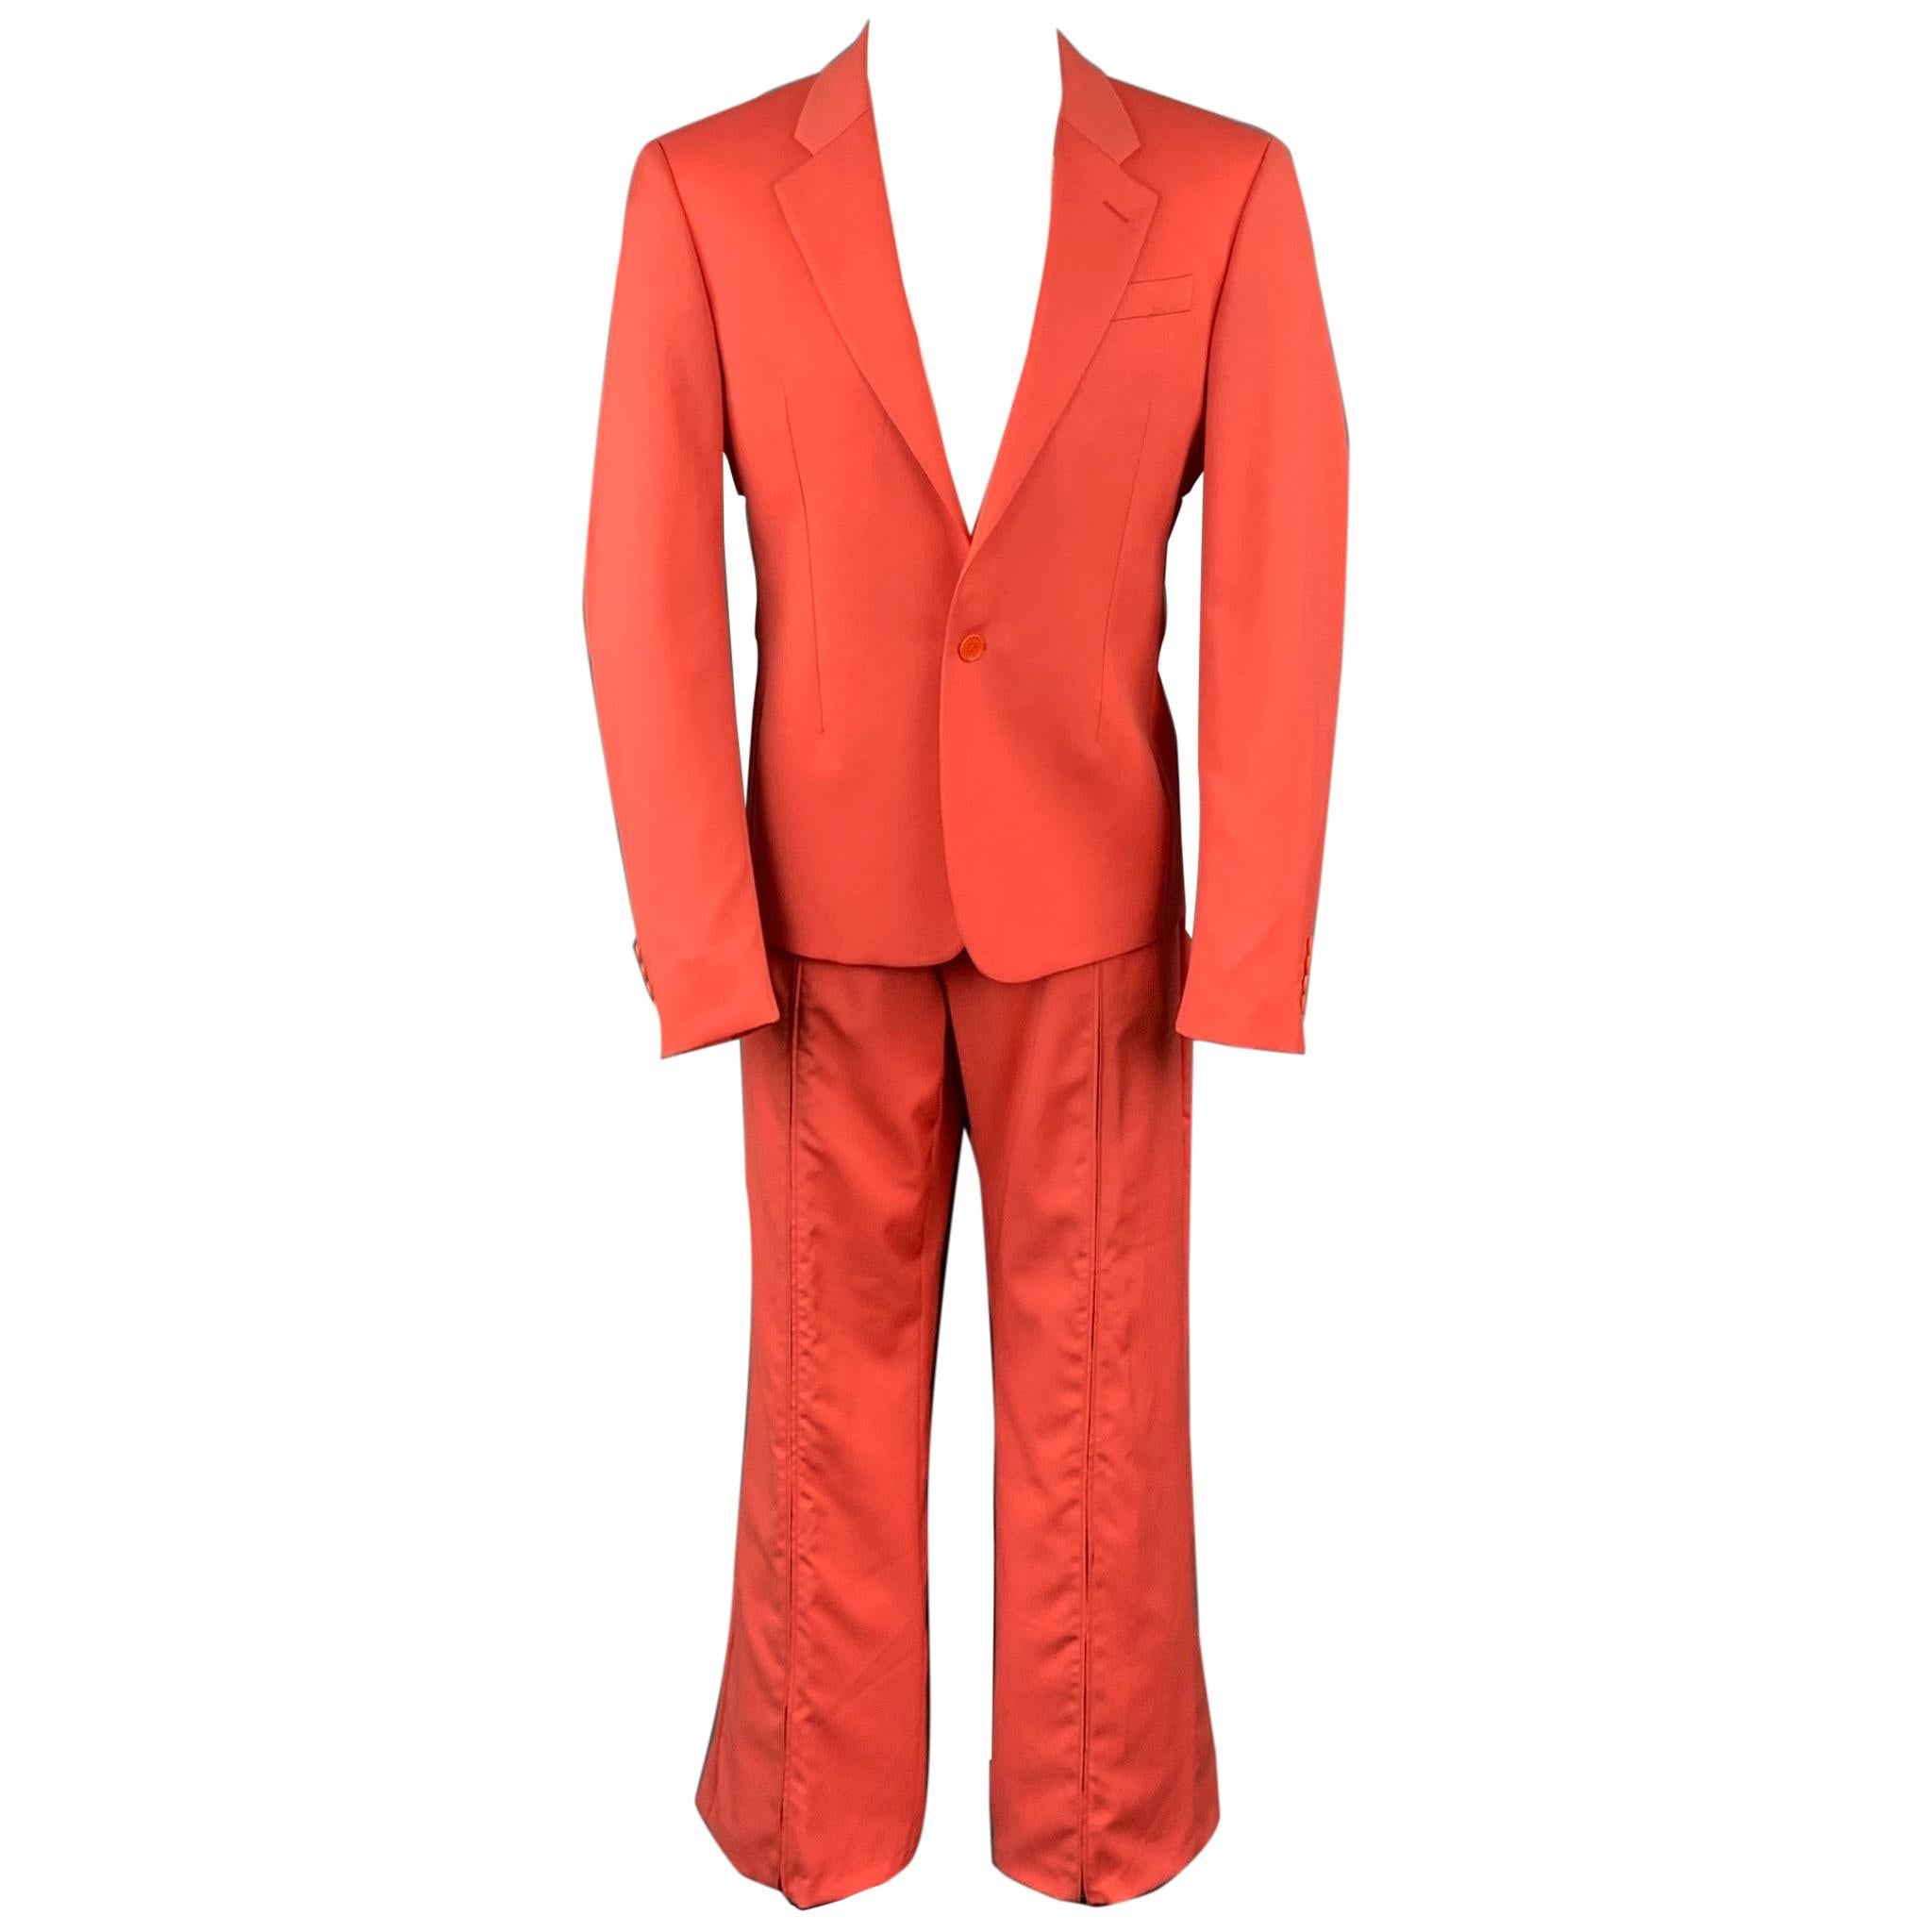 VERSUS by GIANNI VERSACE Size 40 Coral Virgin Wool Notch Lapel Suit